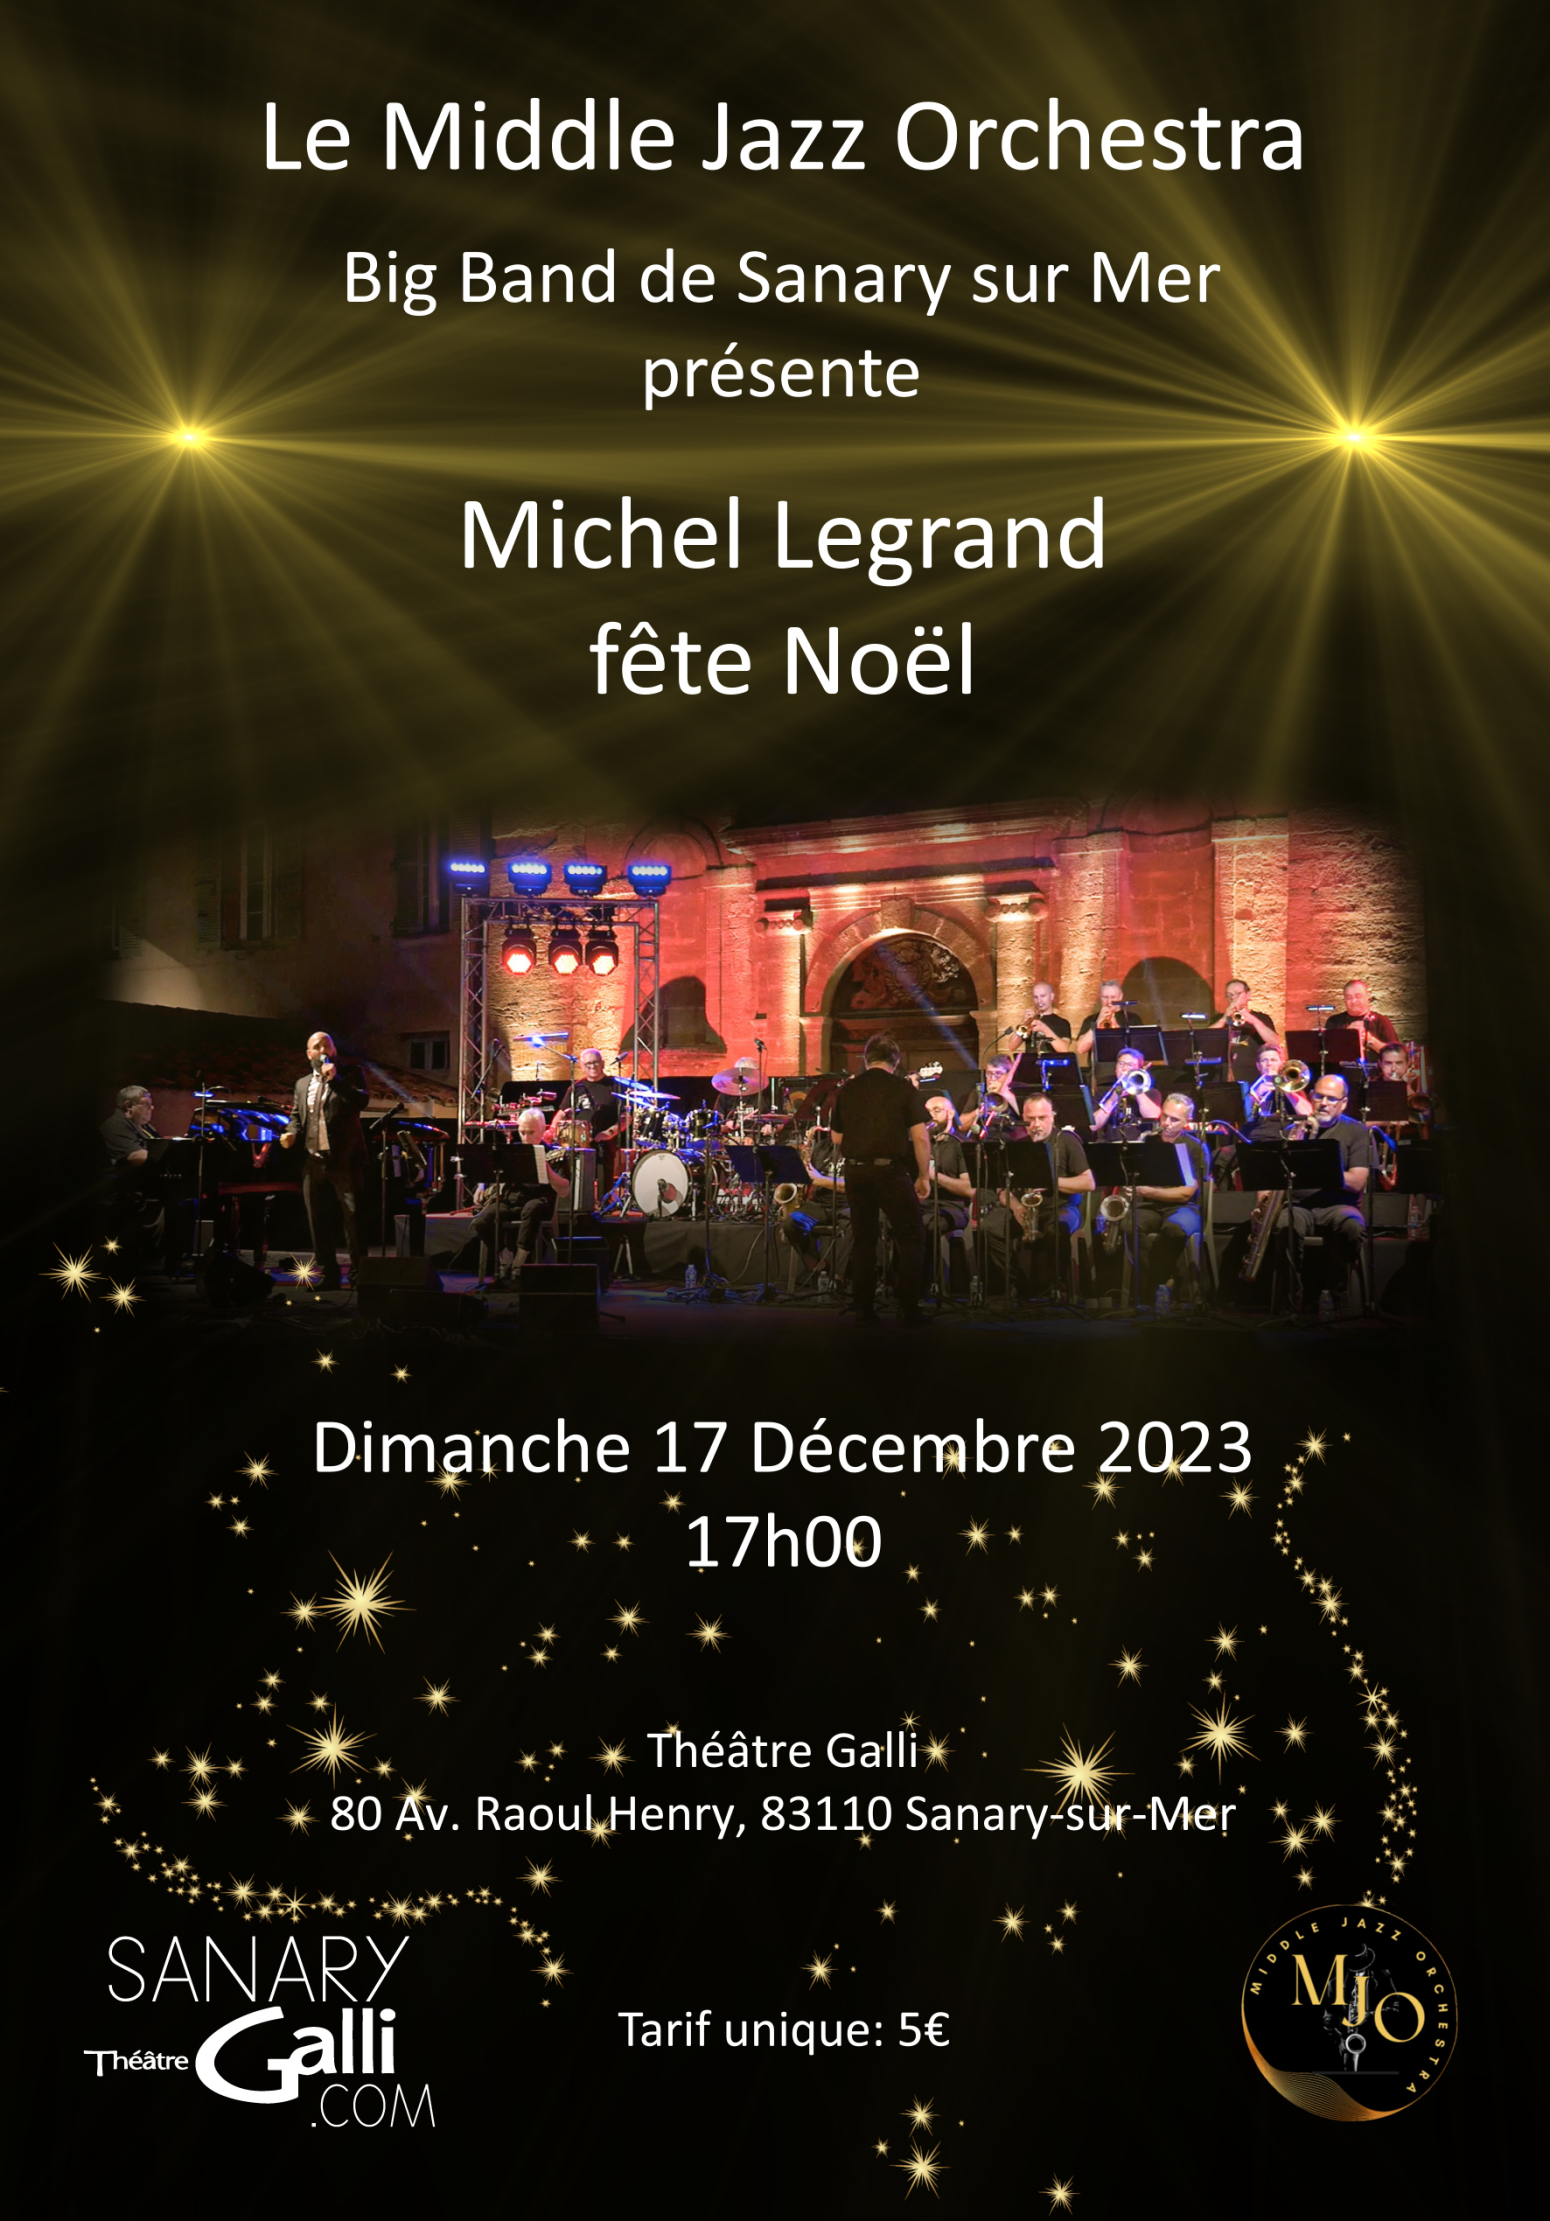 Le Middle Jazz Orchestra Michel Legrand fête Noël - Dom'Jazz